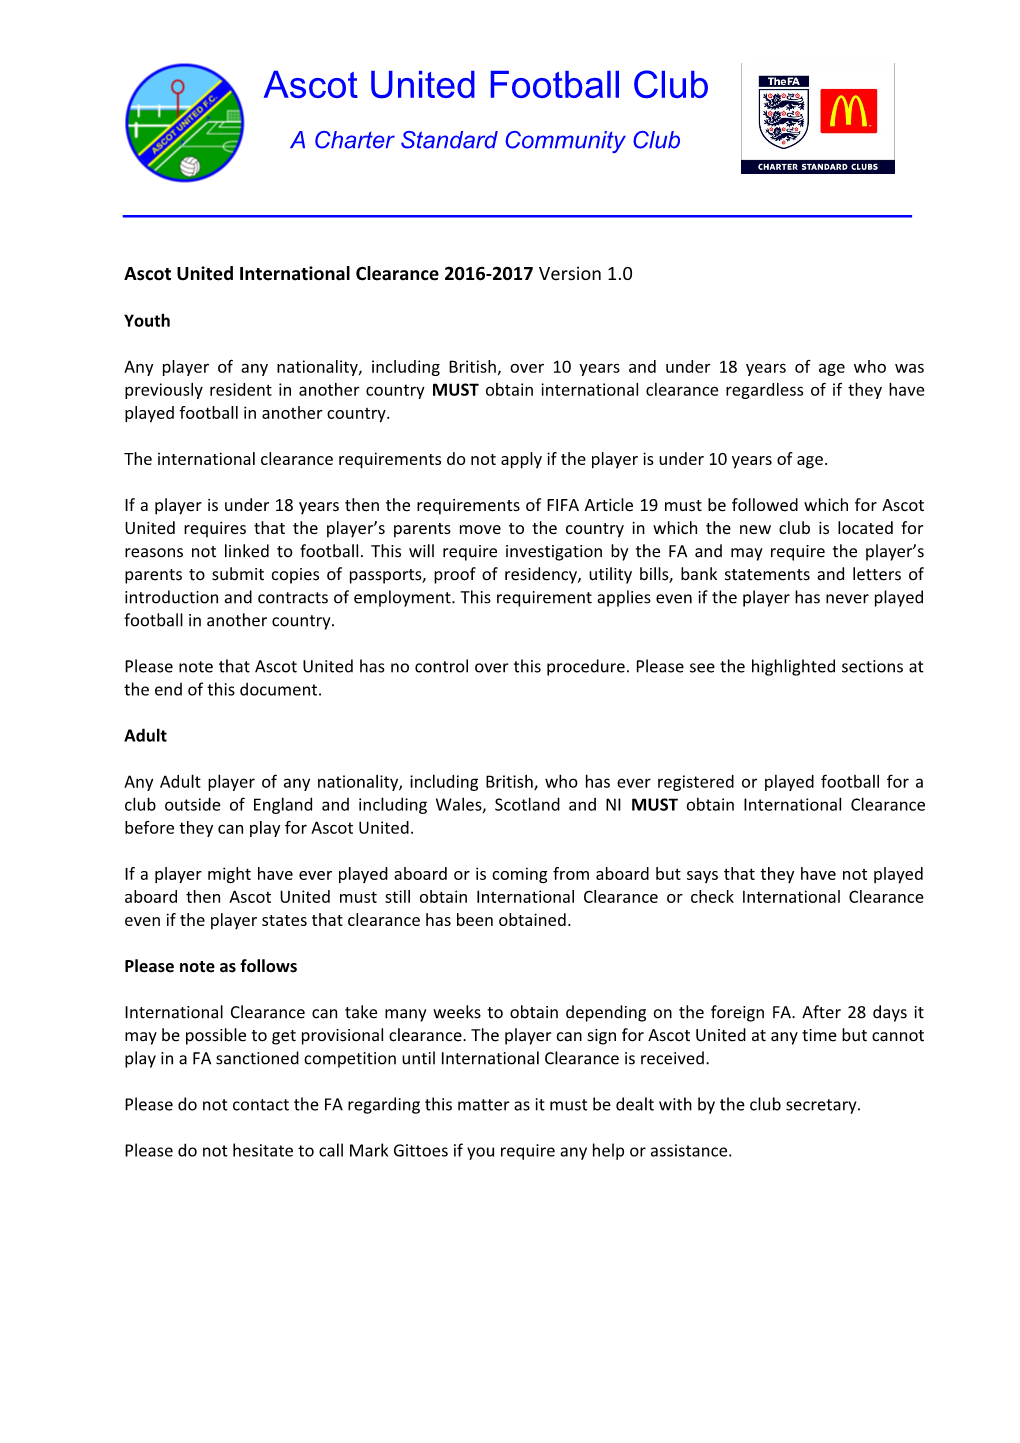 Ascot United International Clearance 2016-2017 Version 1.0